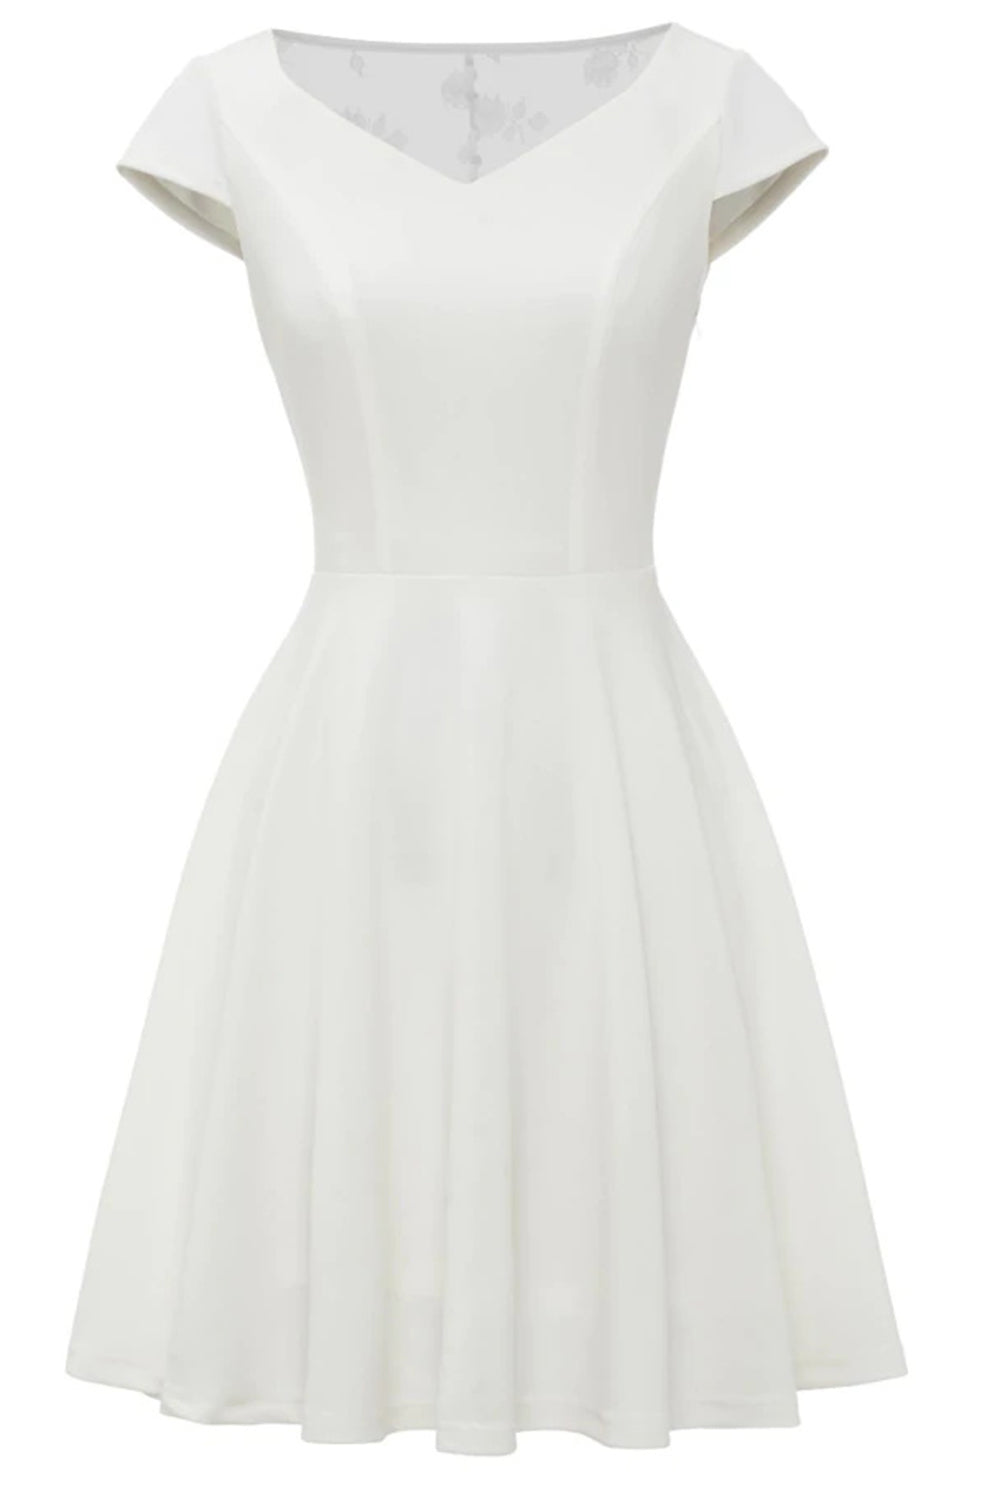 Vestido Vintage de Encaje Blanco línea A